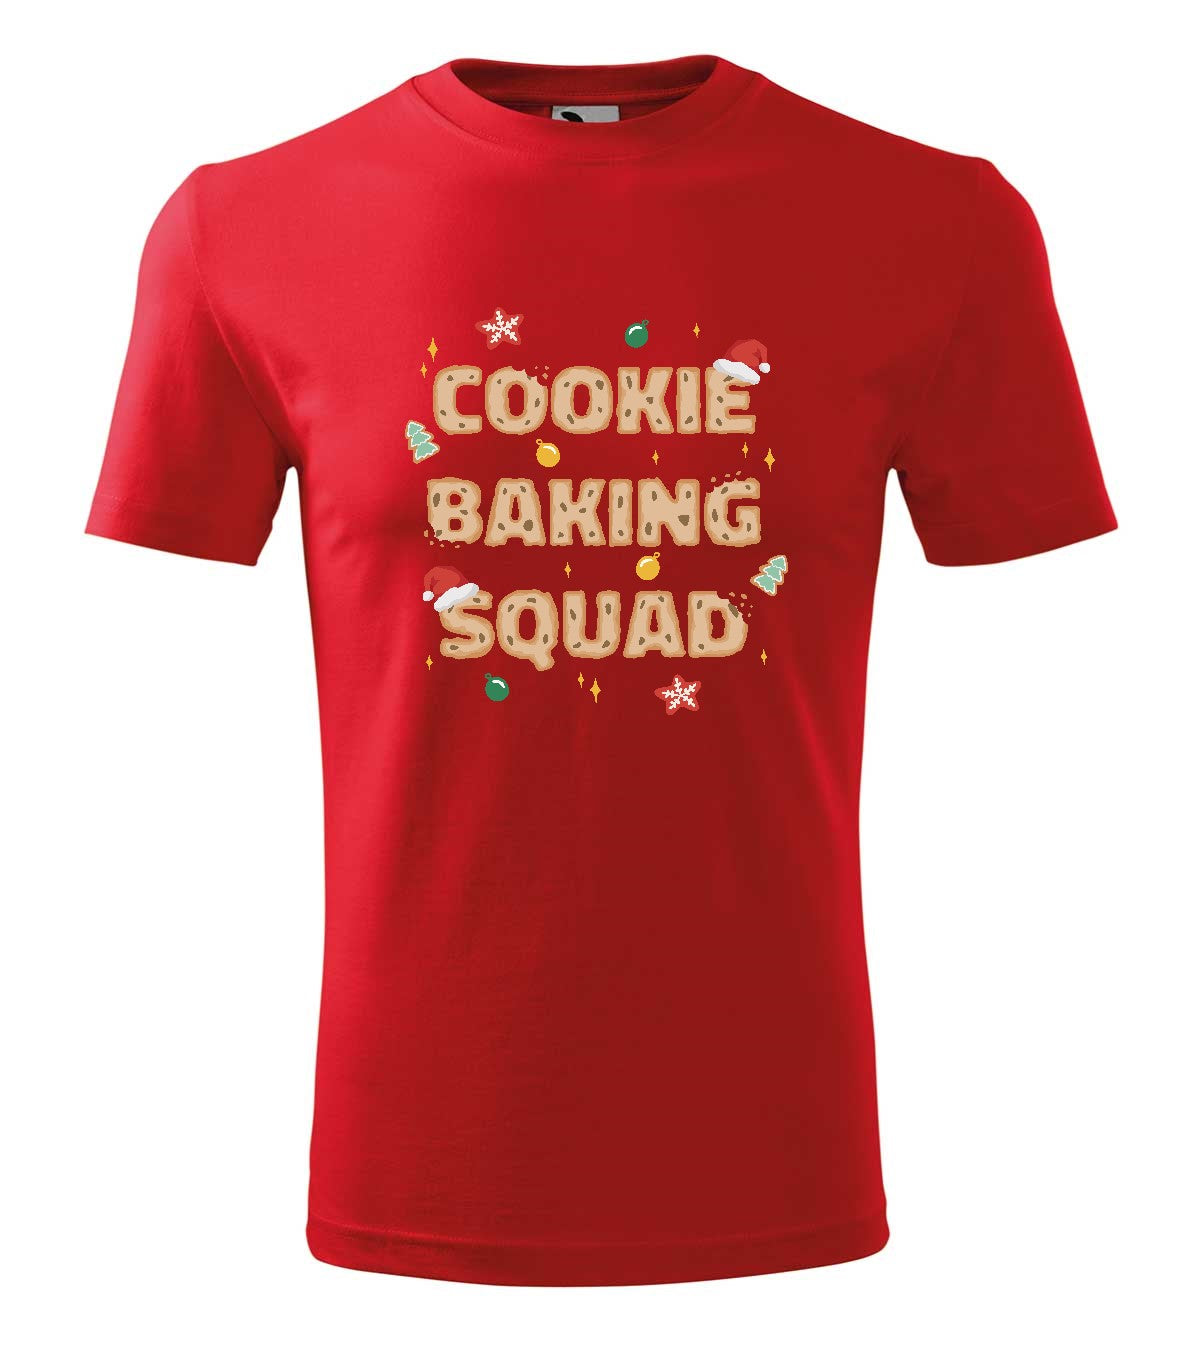 Cookie Baking Squad férfi technikai póló